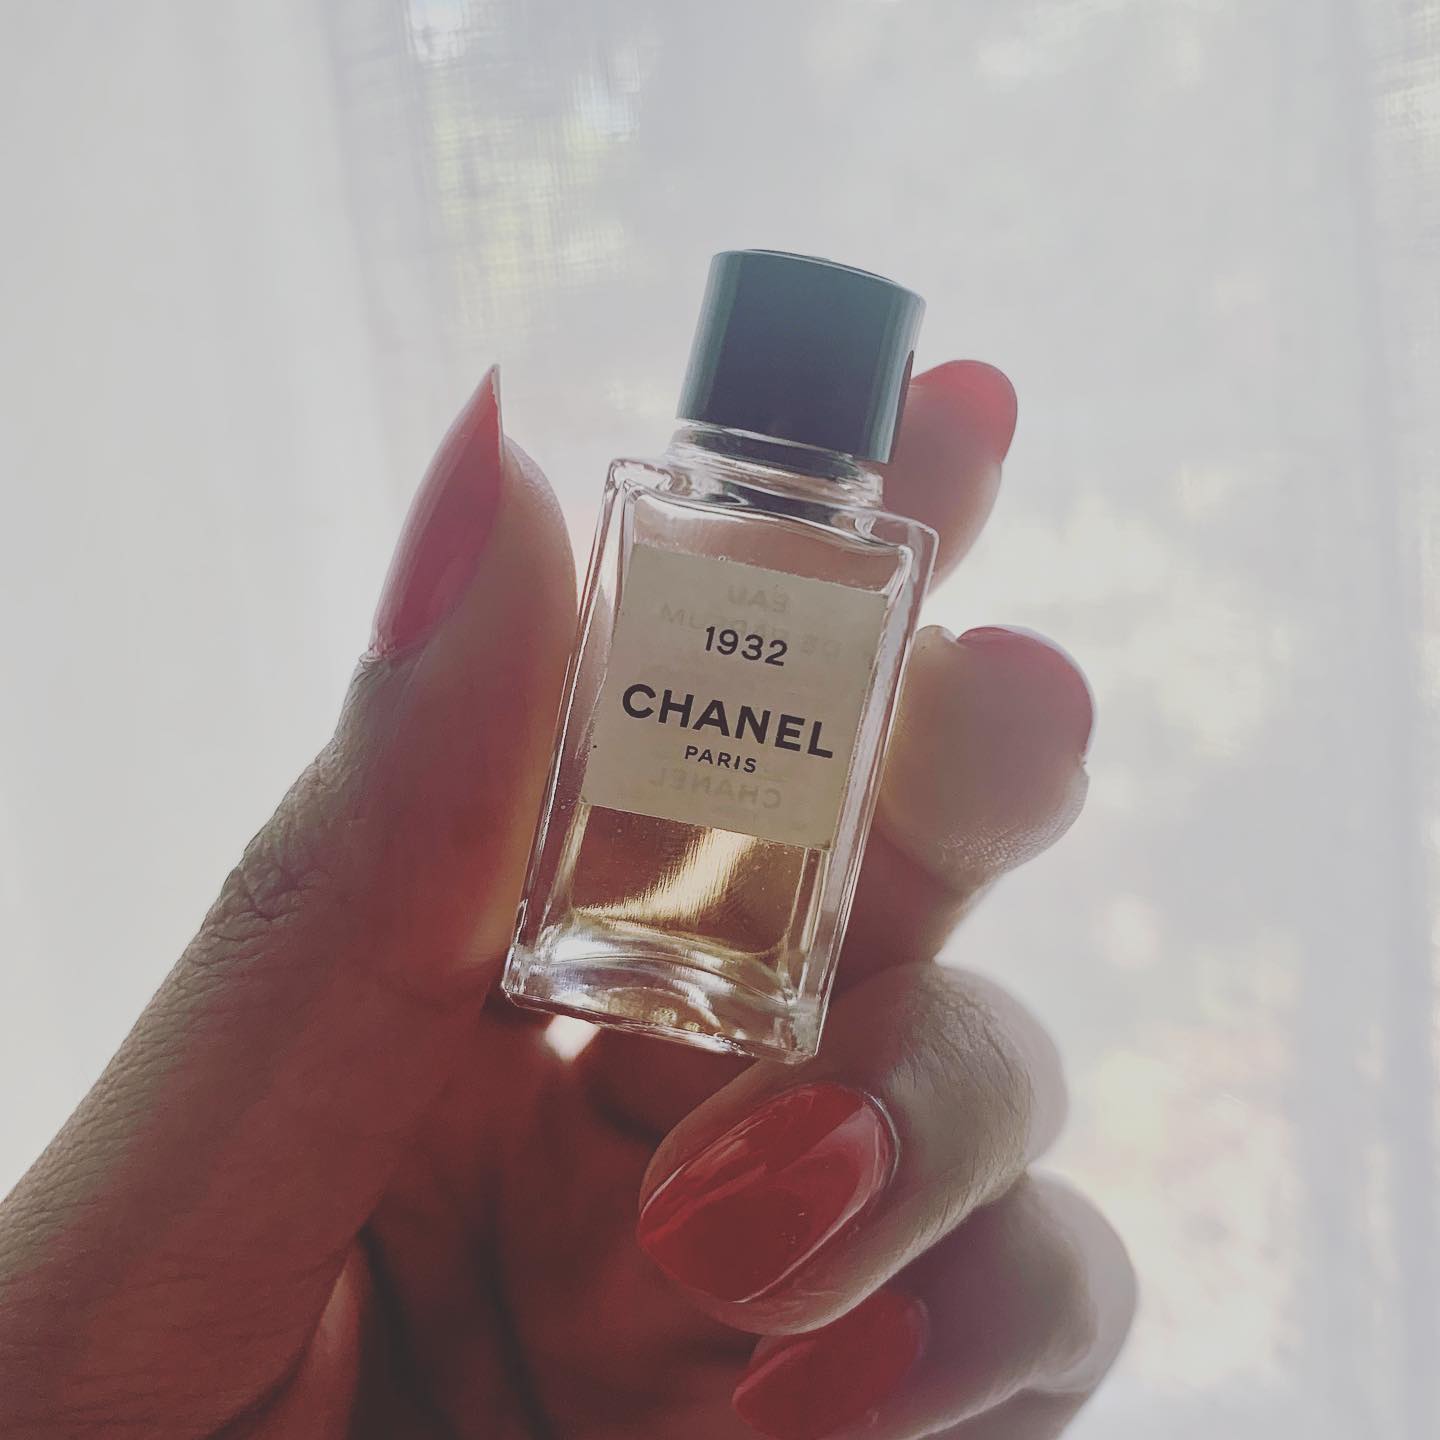 1932 chanel perfume